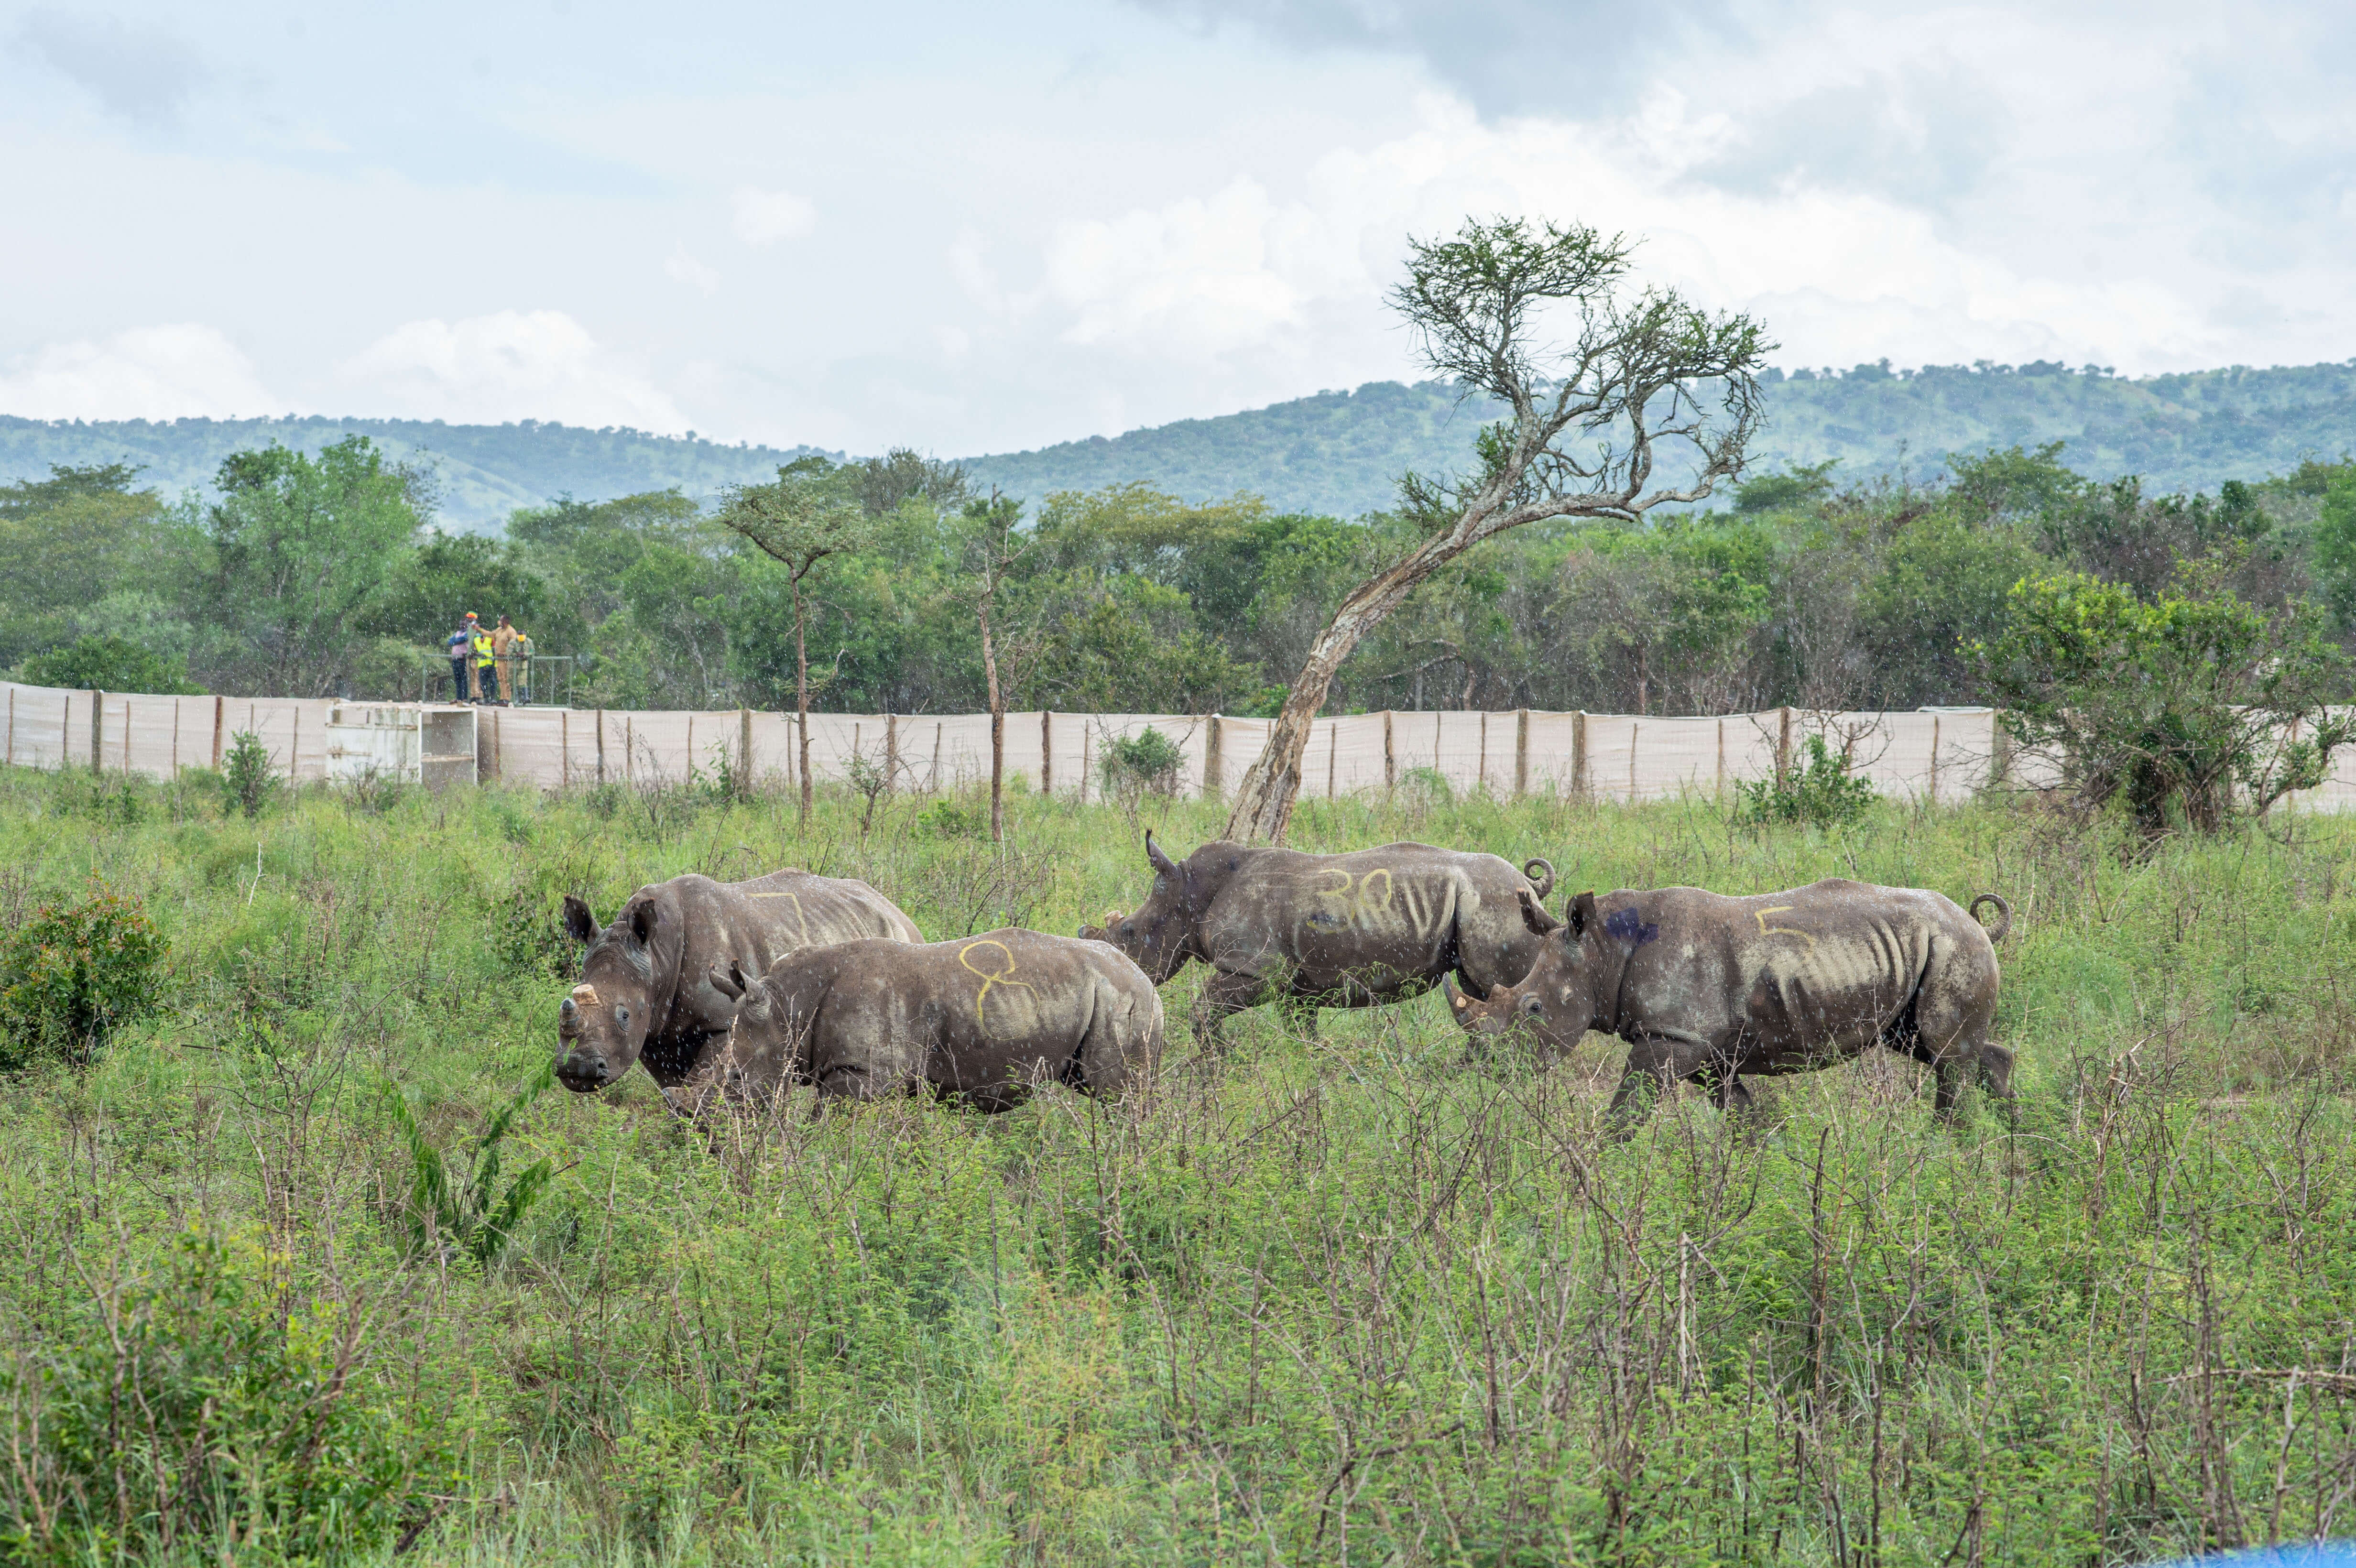 30 White Rhinos successfully reintroduced